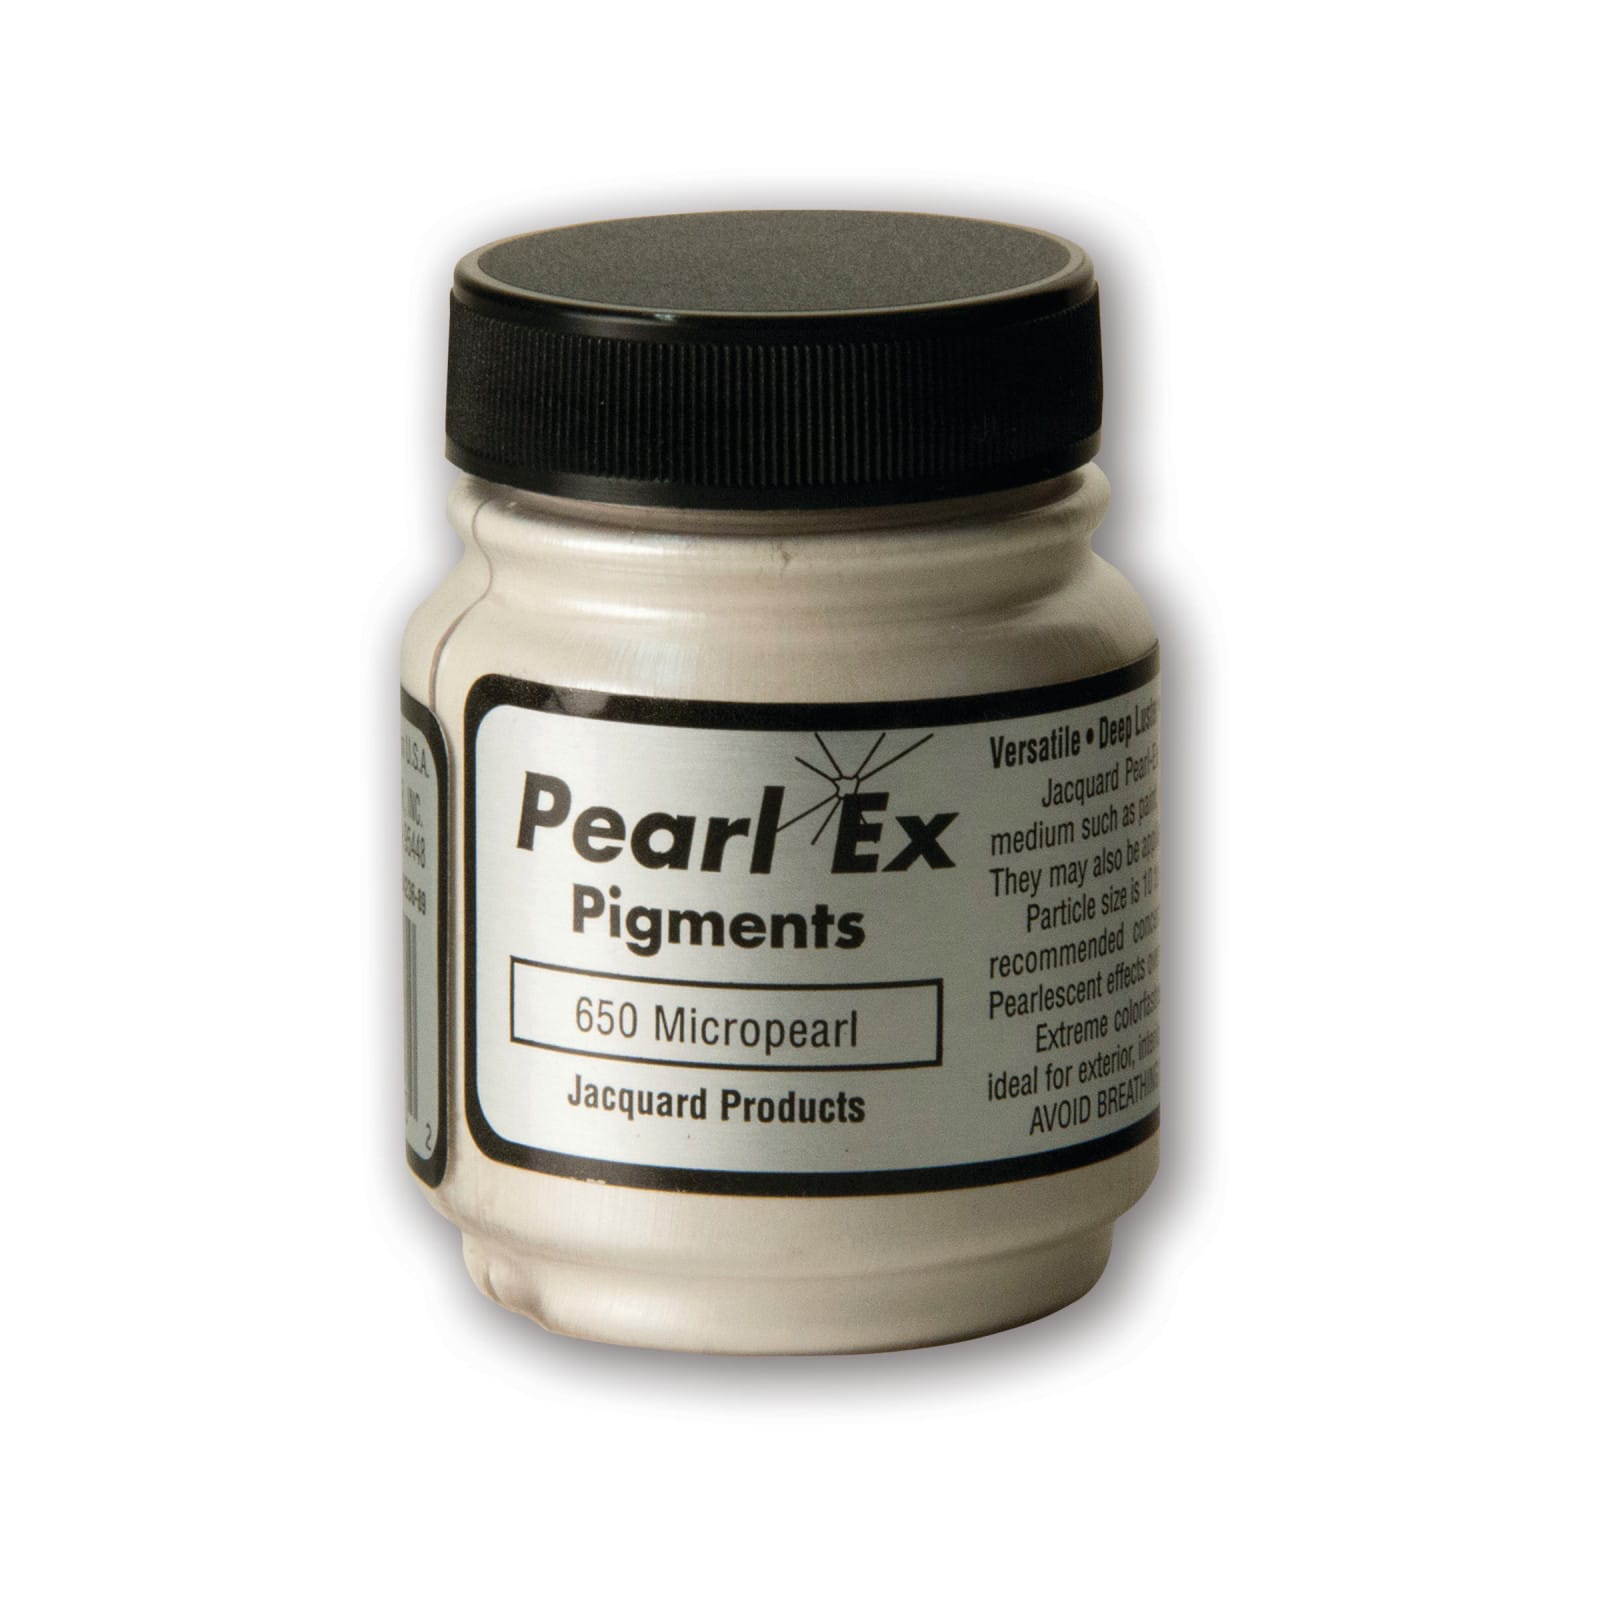 Jacquard Pearl Ex Powdered Pigments™, 0.75oz.